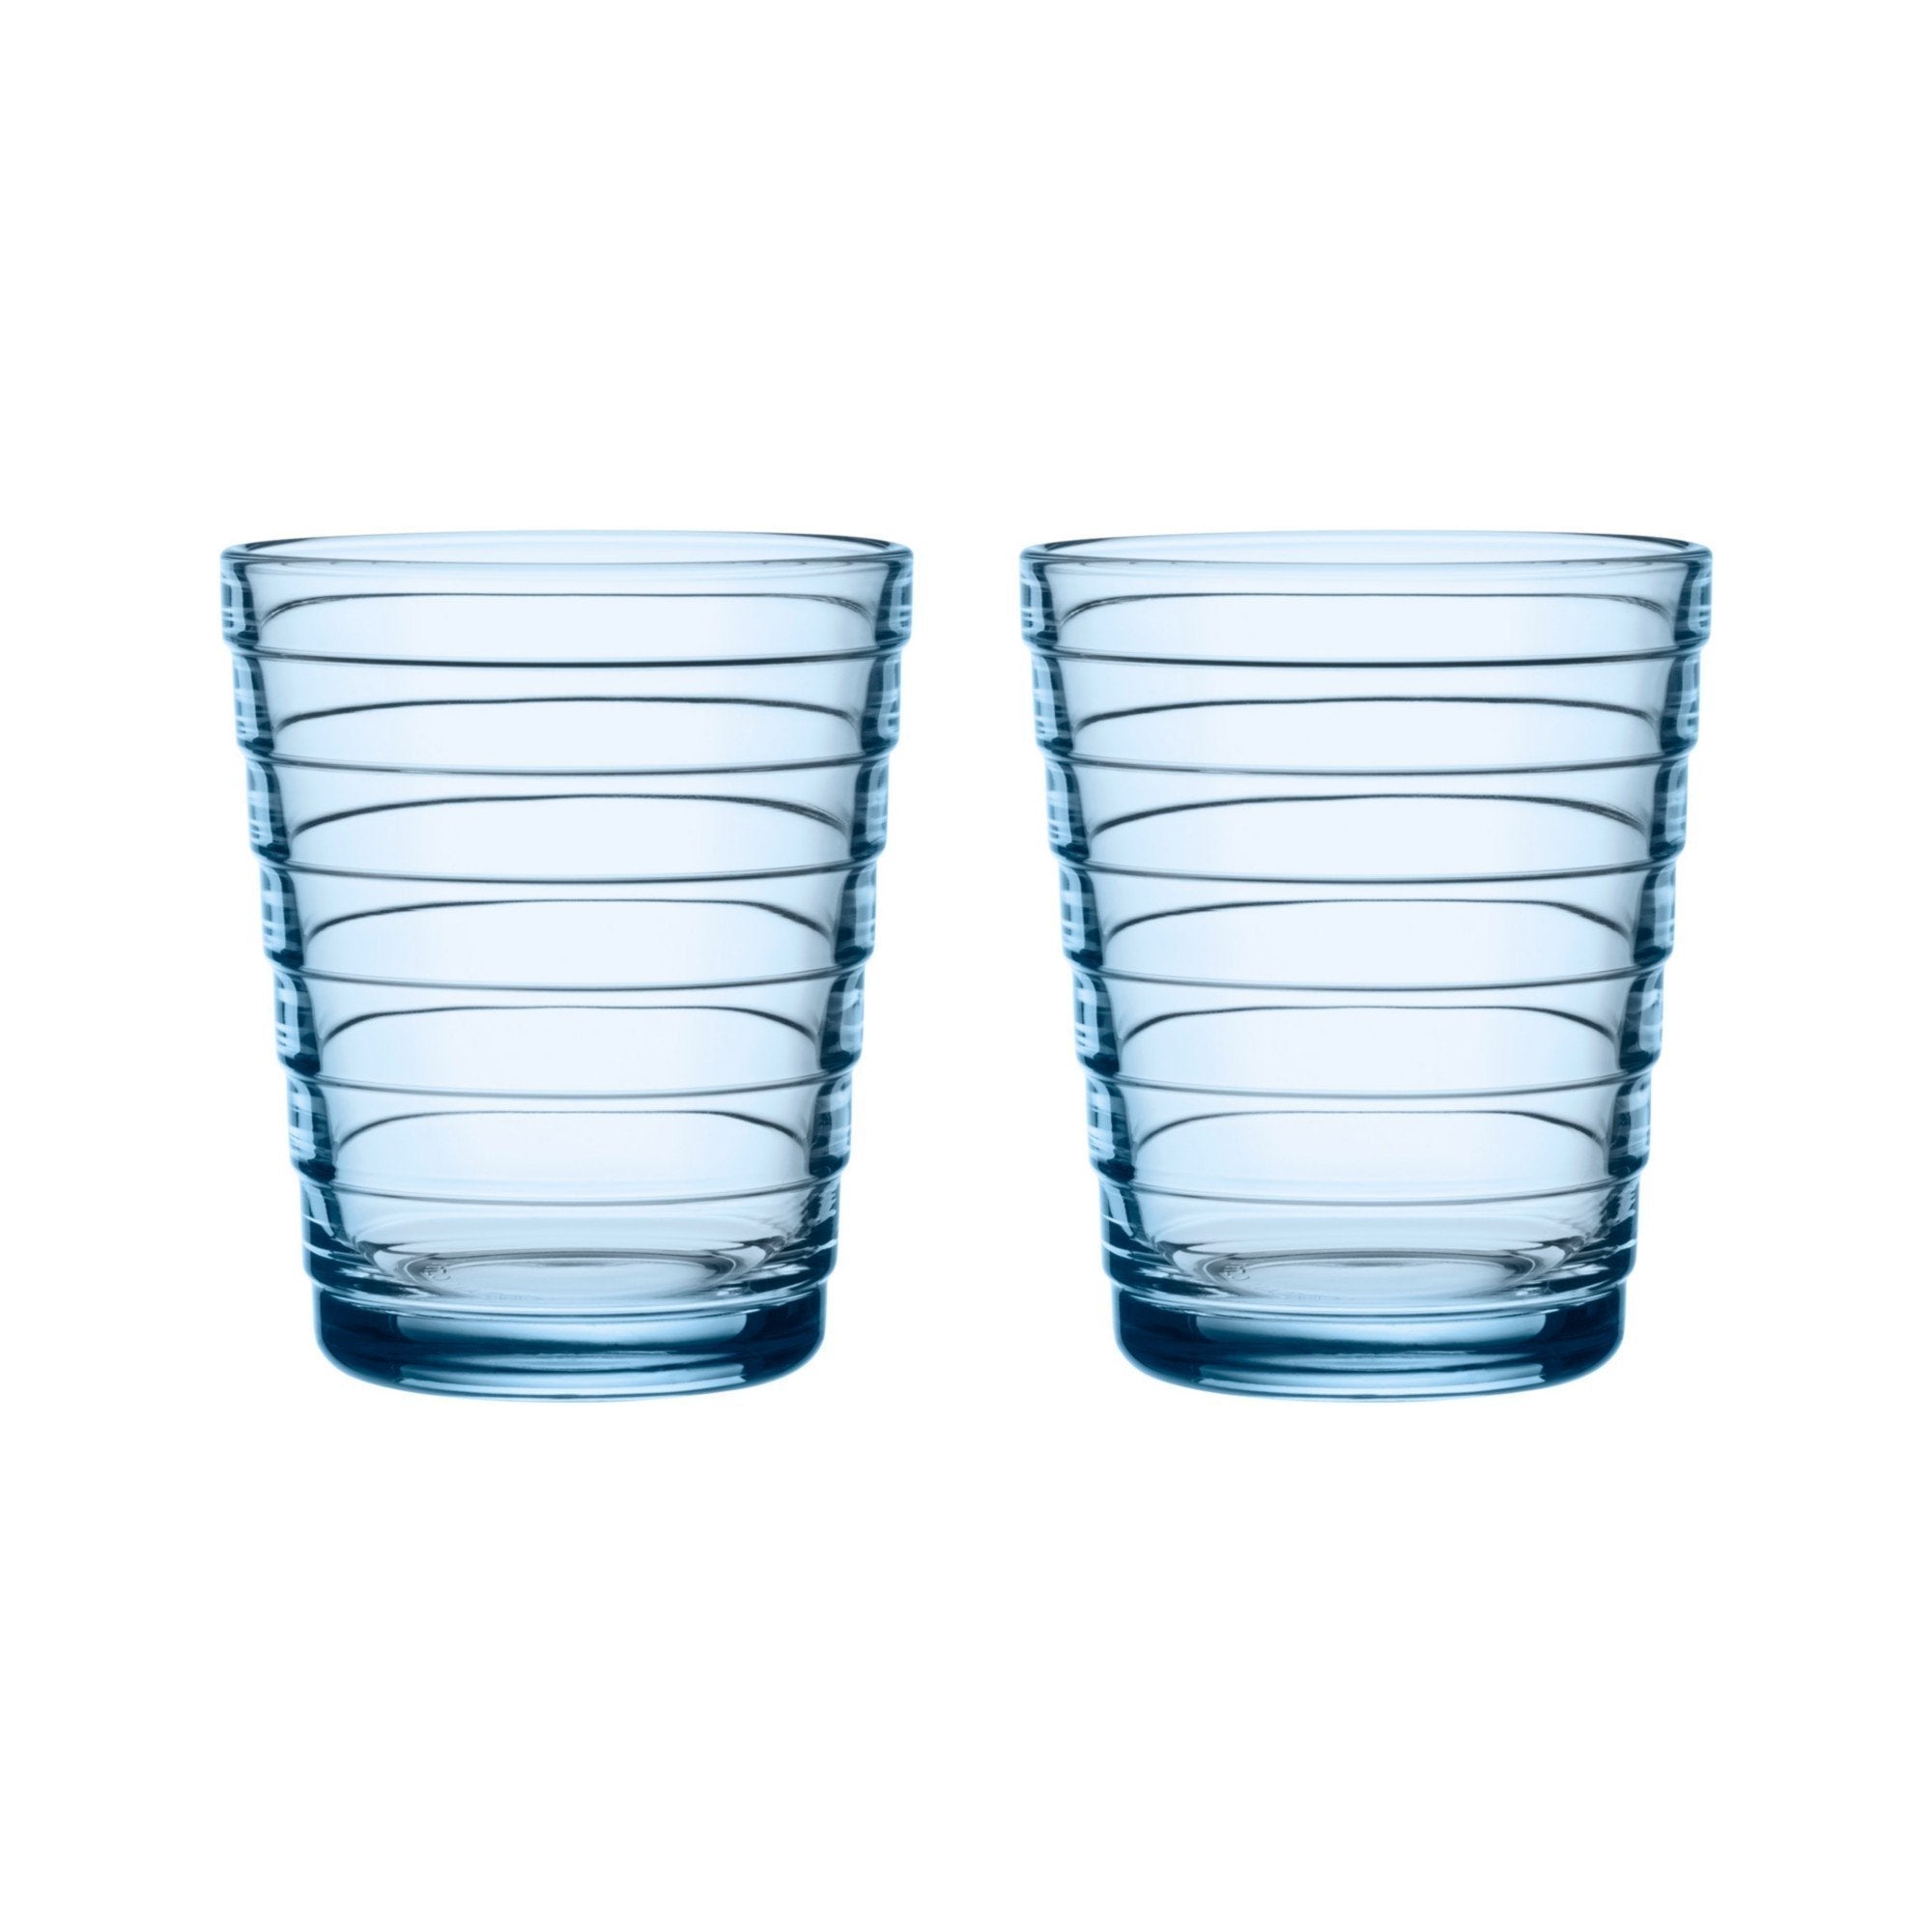 Iittala Aino Aalto Trinkglas Aqua 22cl, 2pcs.